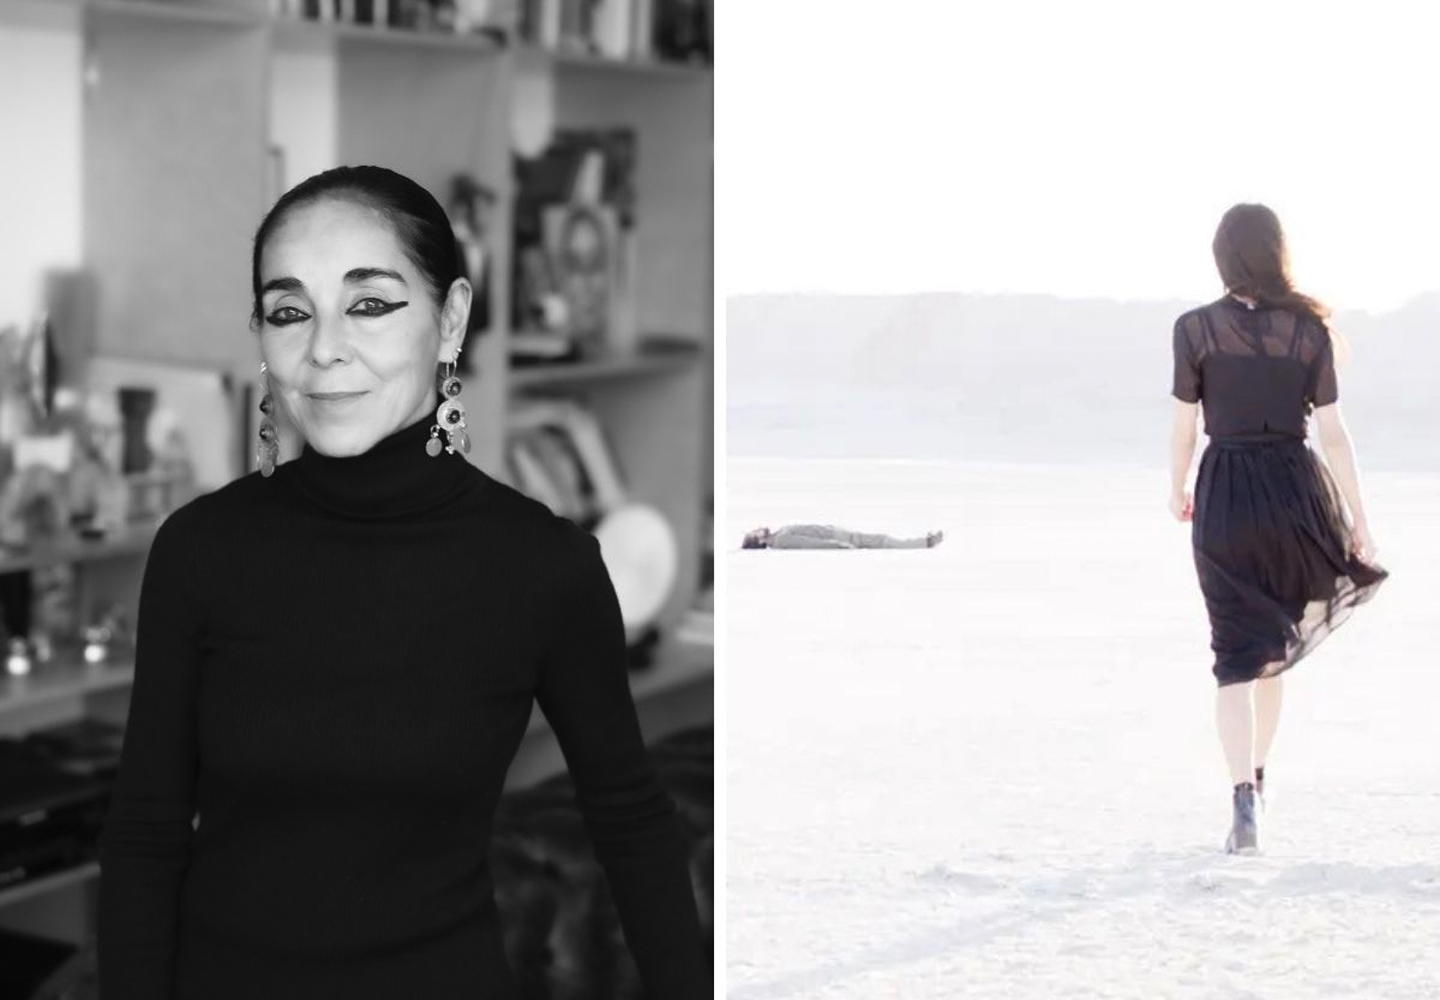 Shirin Neshat’s Land of Dreams: Screening and Conversation